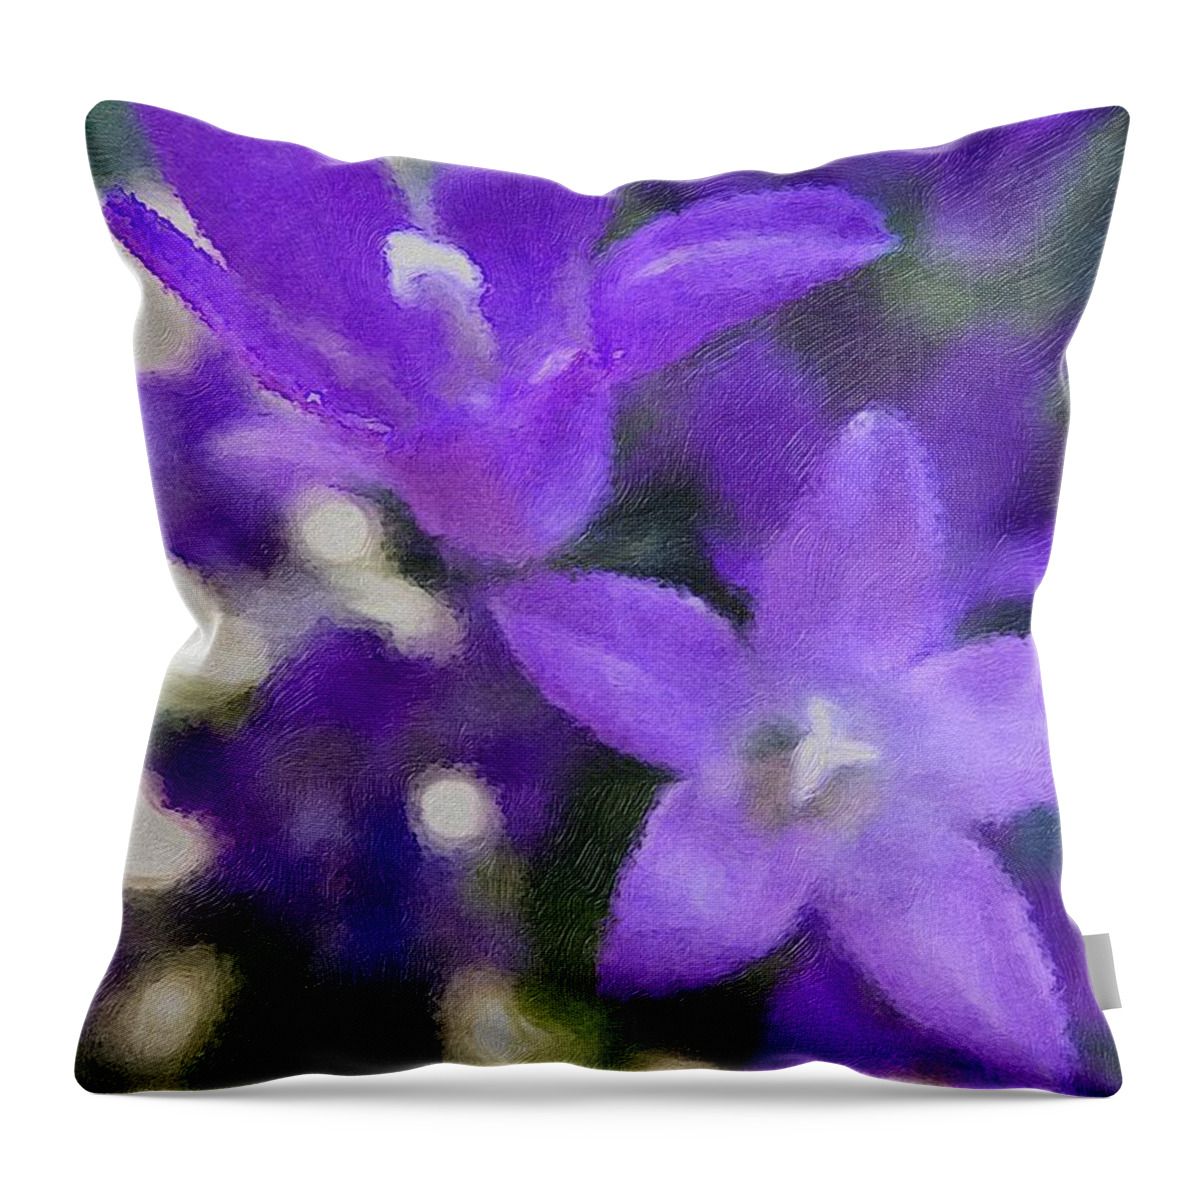 Brushstroke Throw Pillow featuring the photograph Purple Campanula Flowers by Jori Reijonen